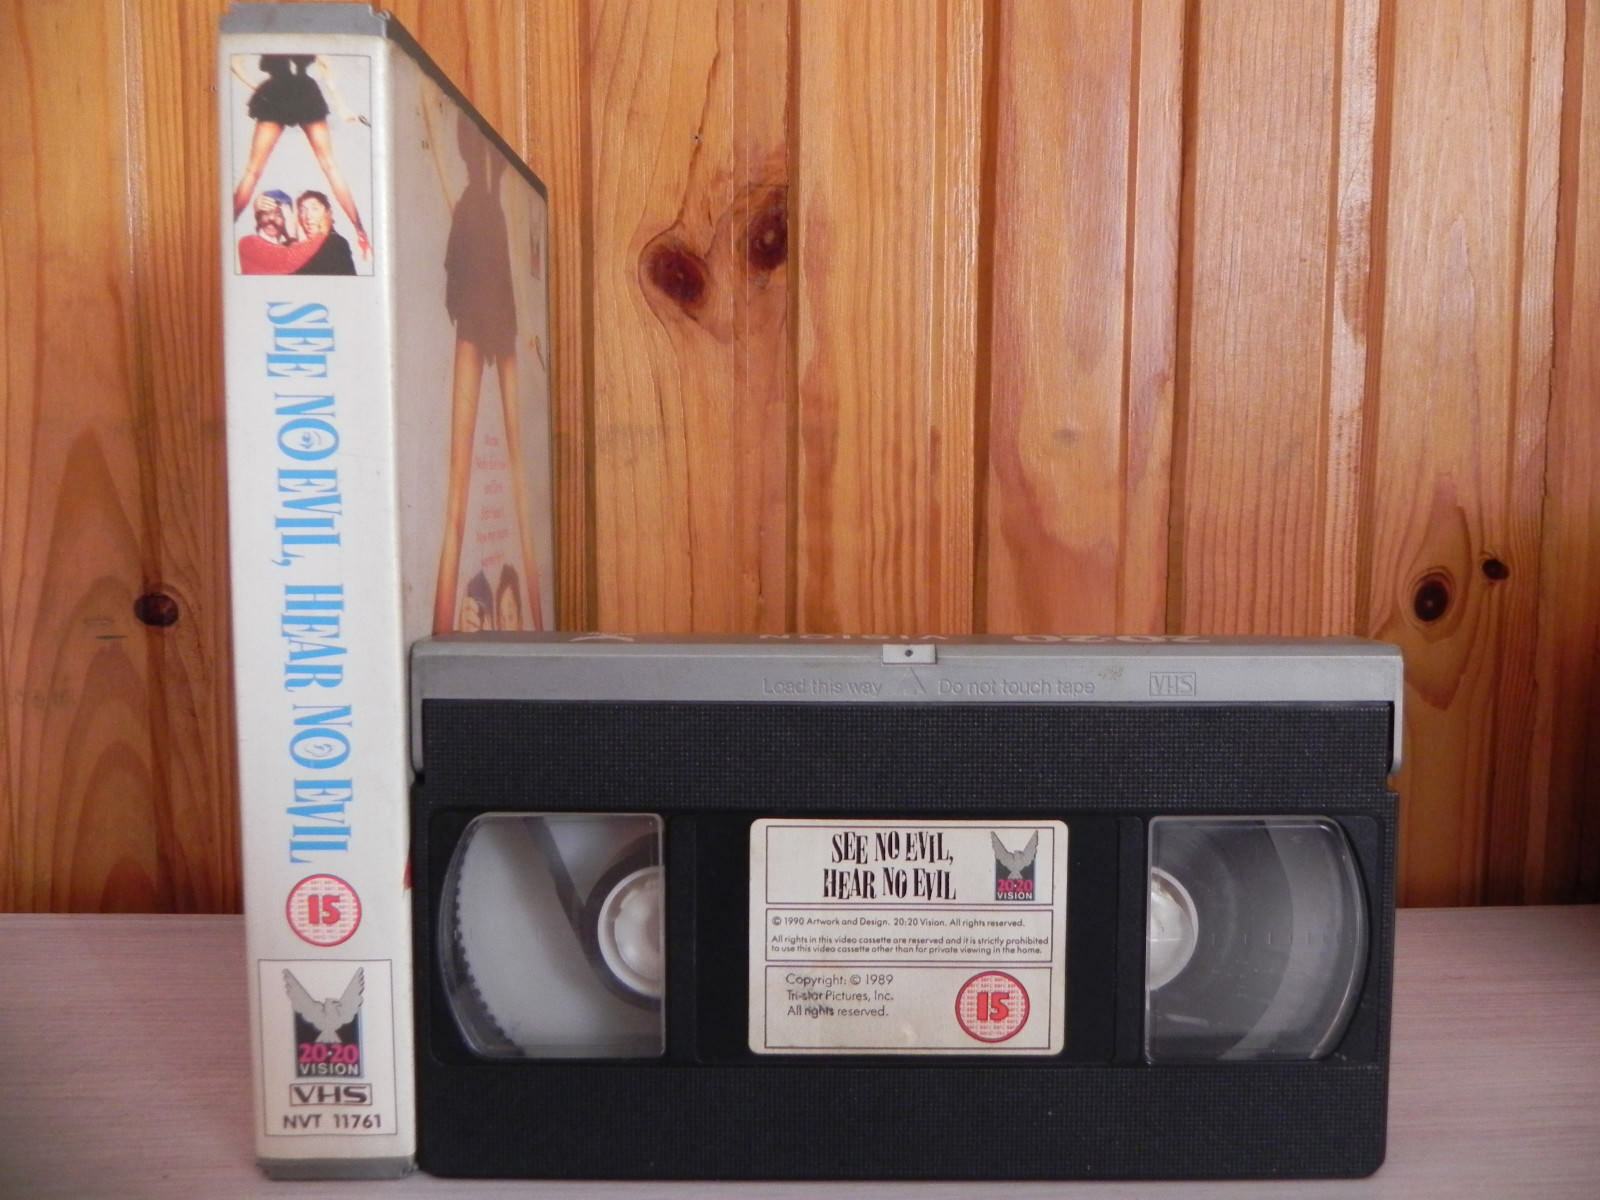 See Evil, Hear No Evil - Classic Comedy - Wilder, Pryor - 20.20 - Big Box - VHS-